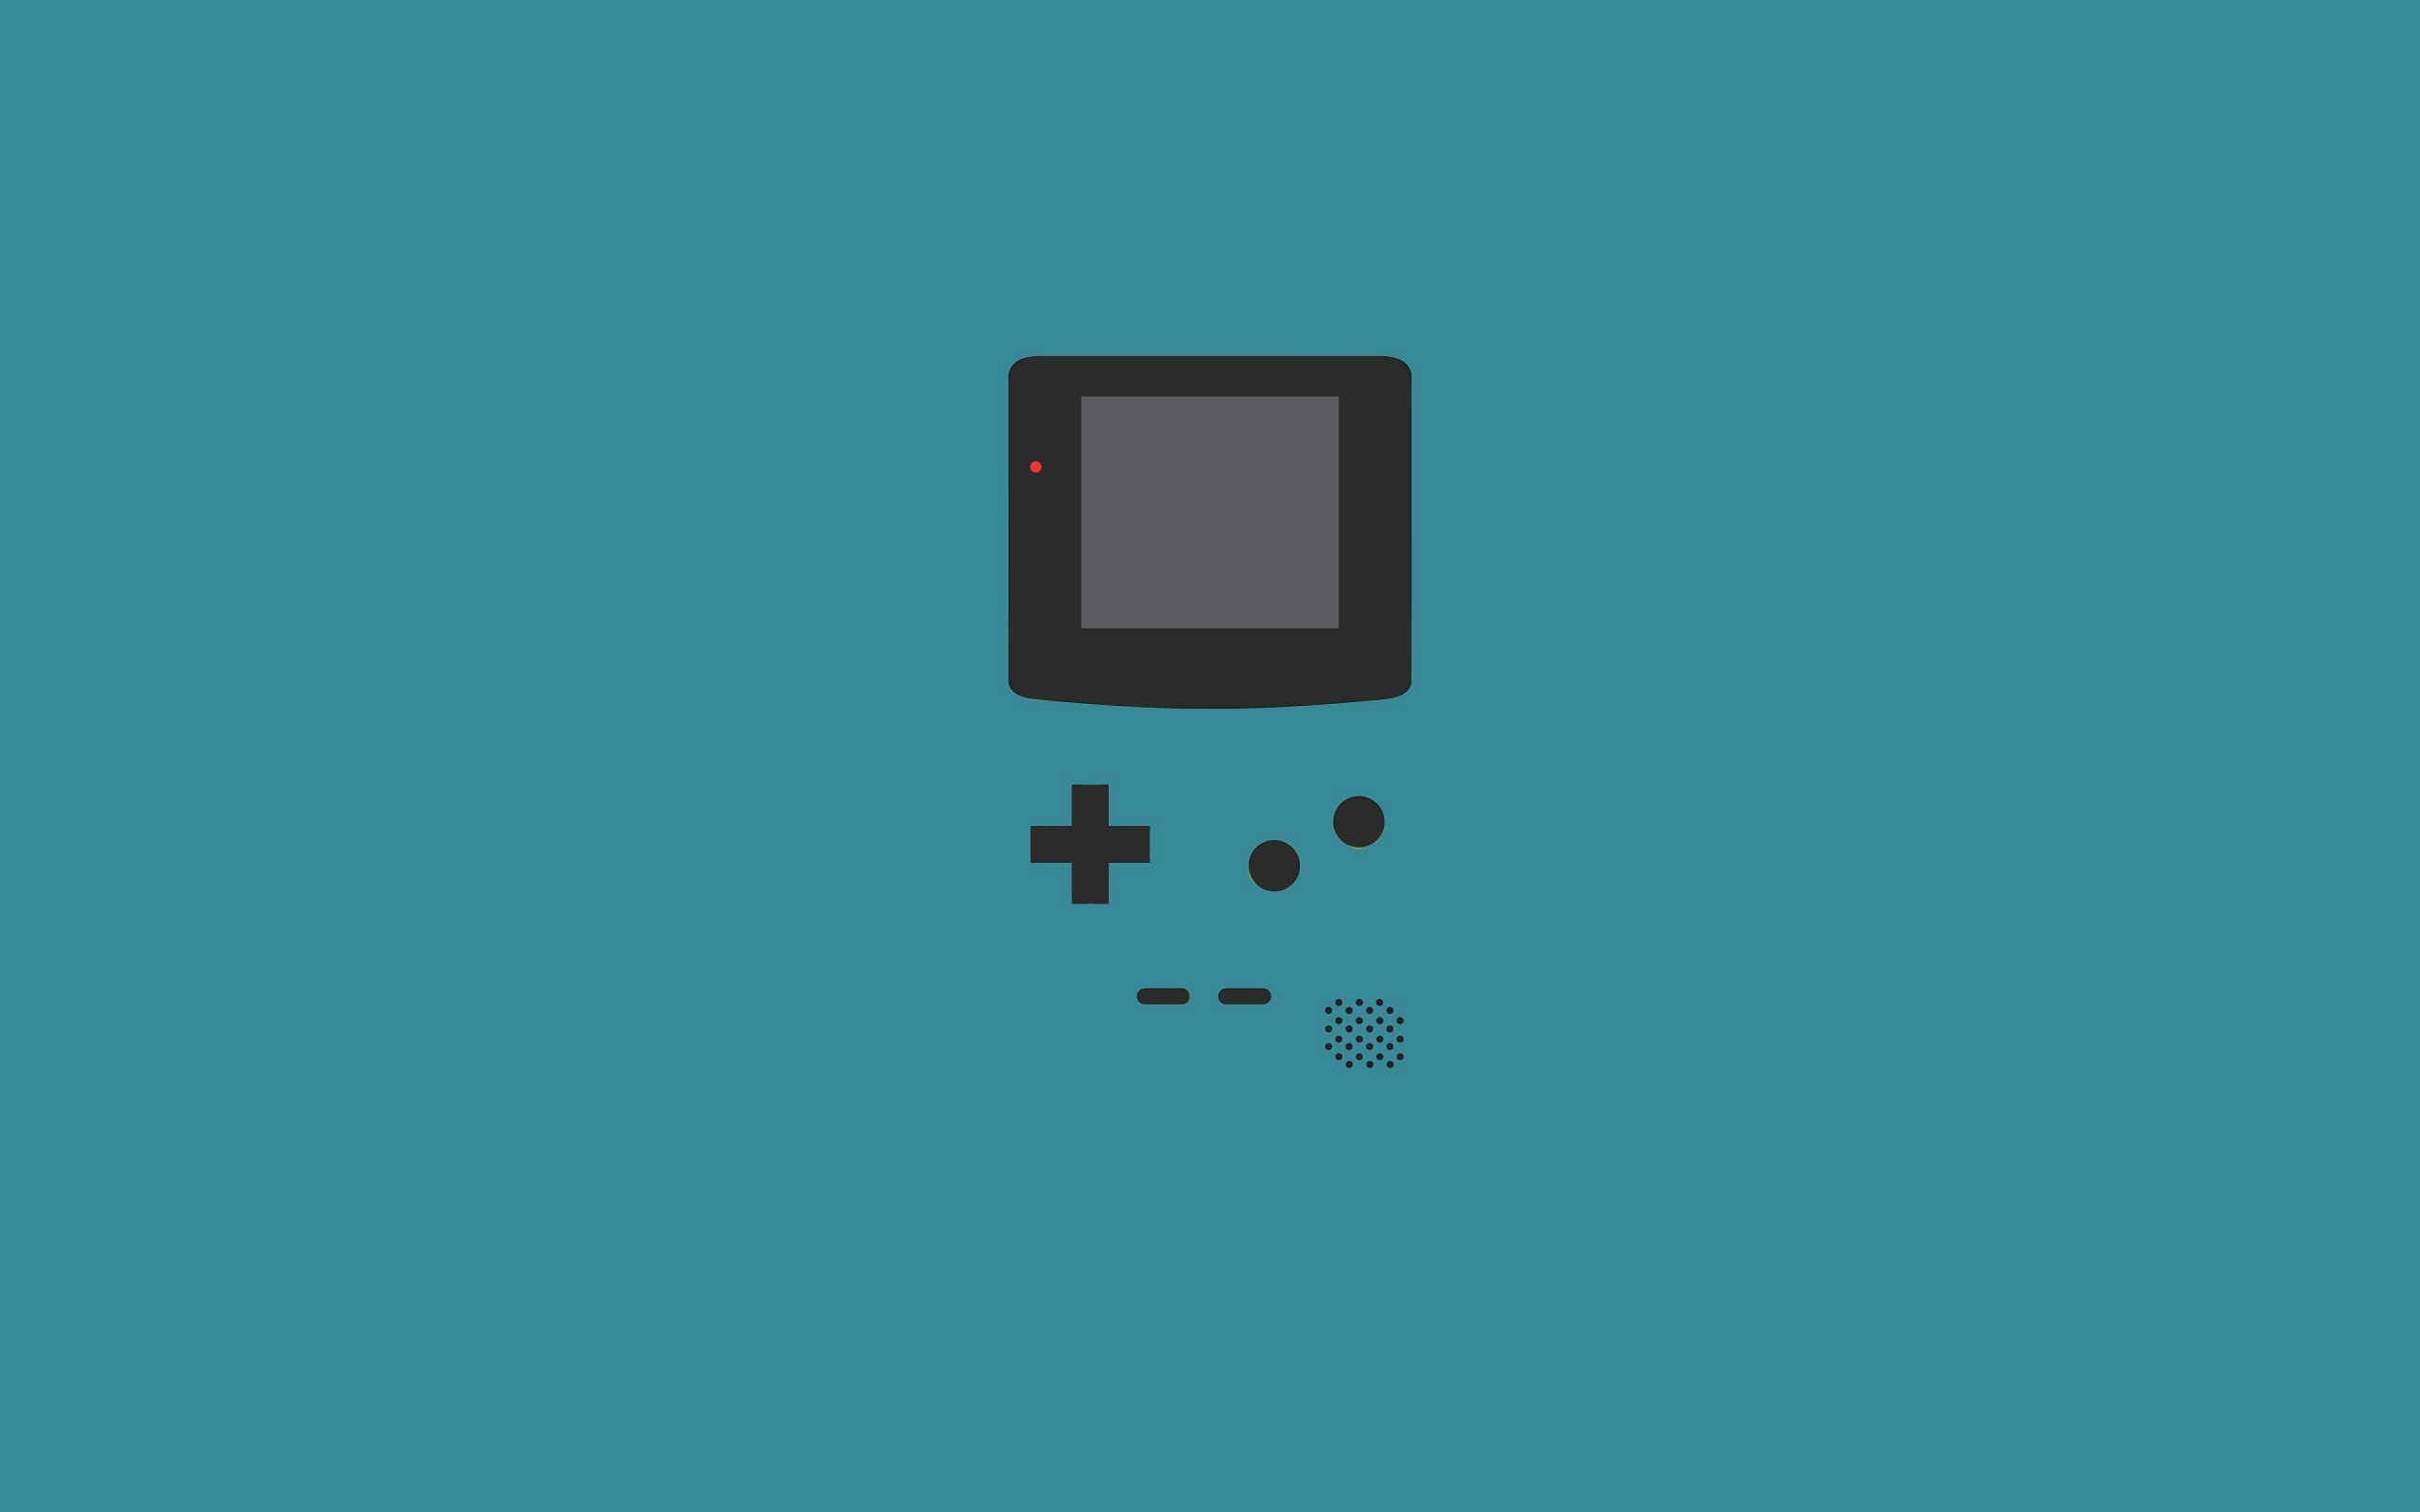 General 2560x1600 minimalism video games video game art simple background cyan background GameBoy Color Nintendo Game Boy